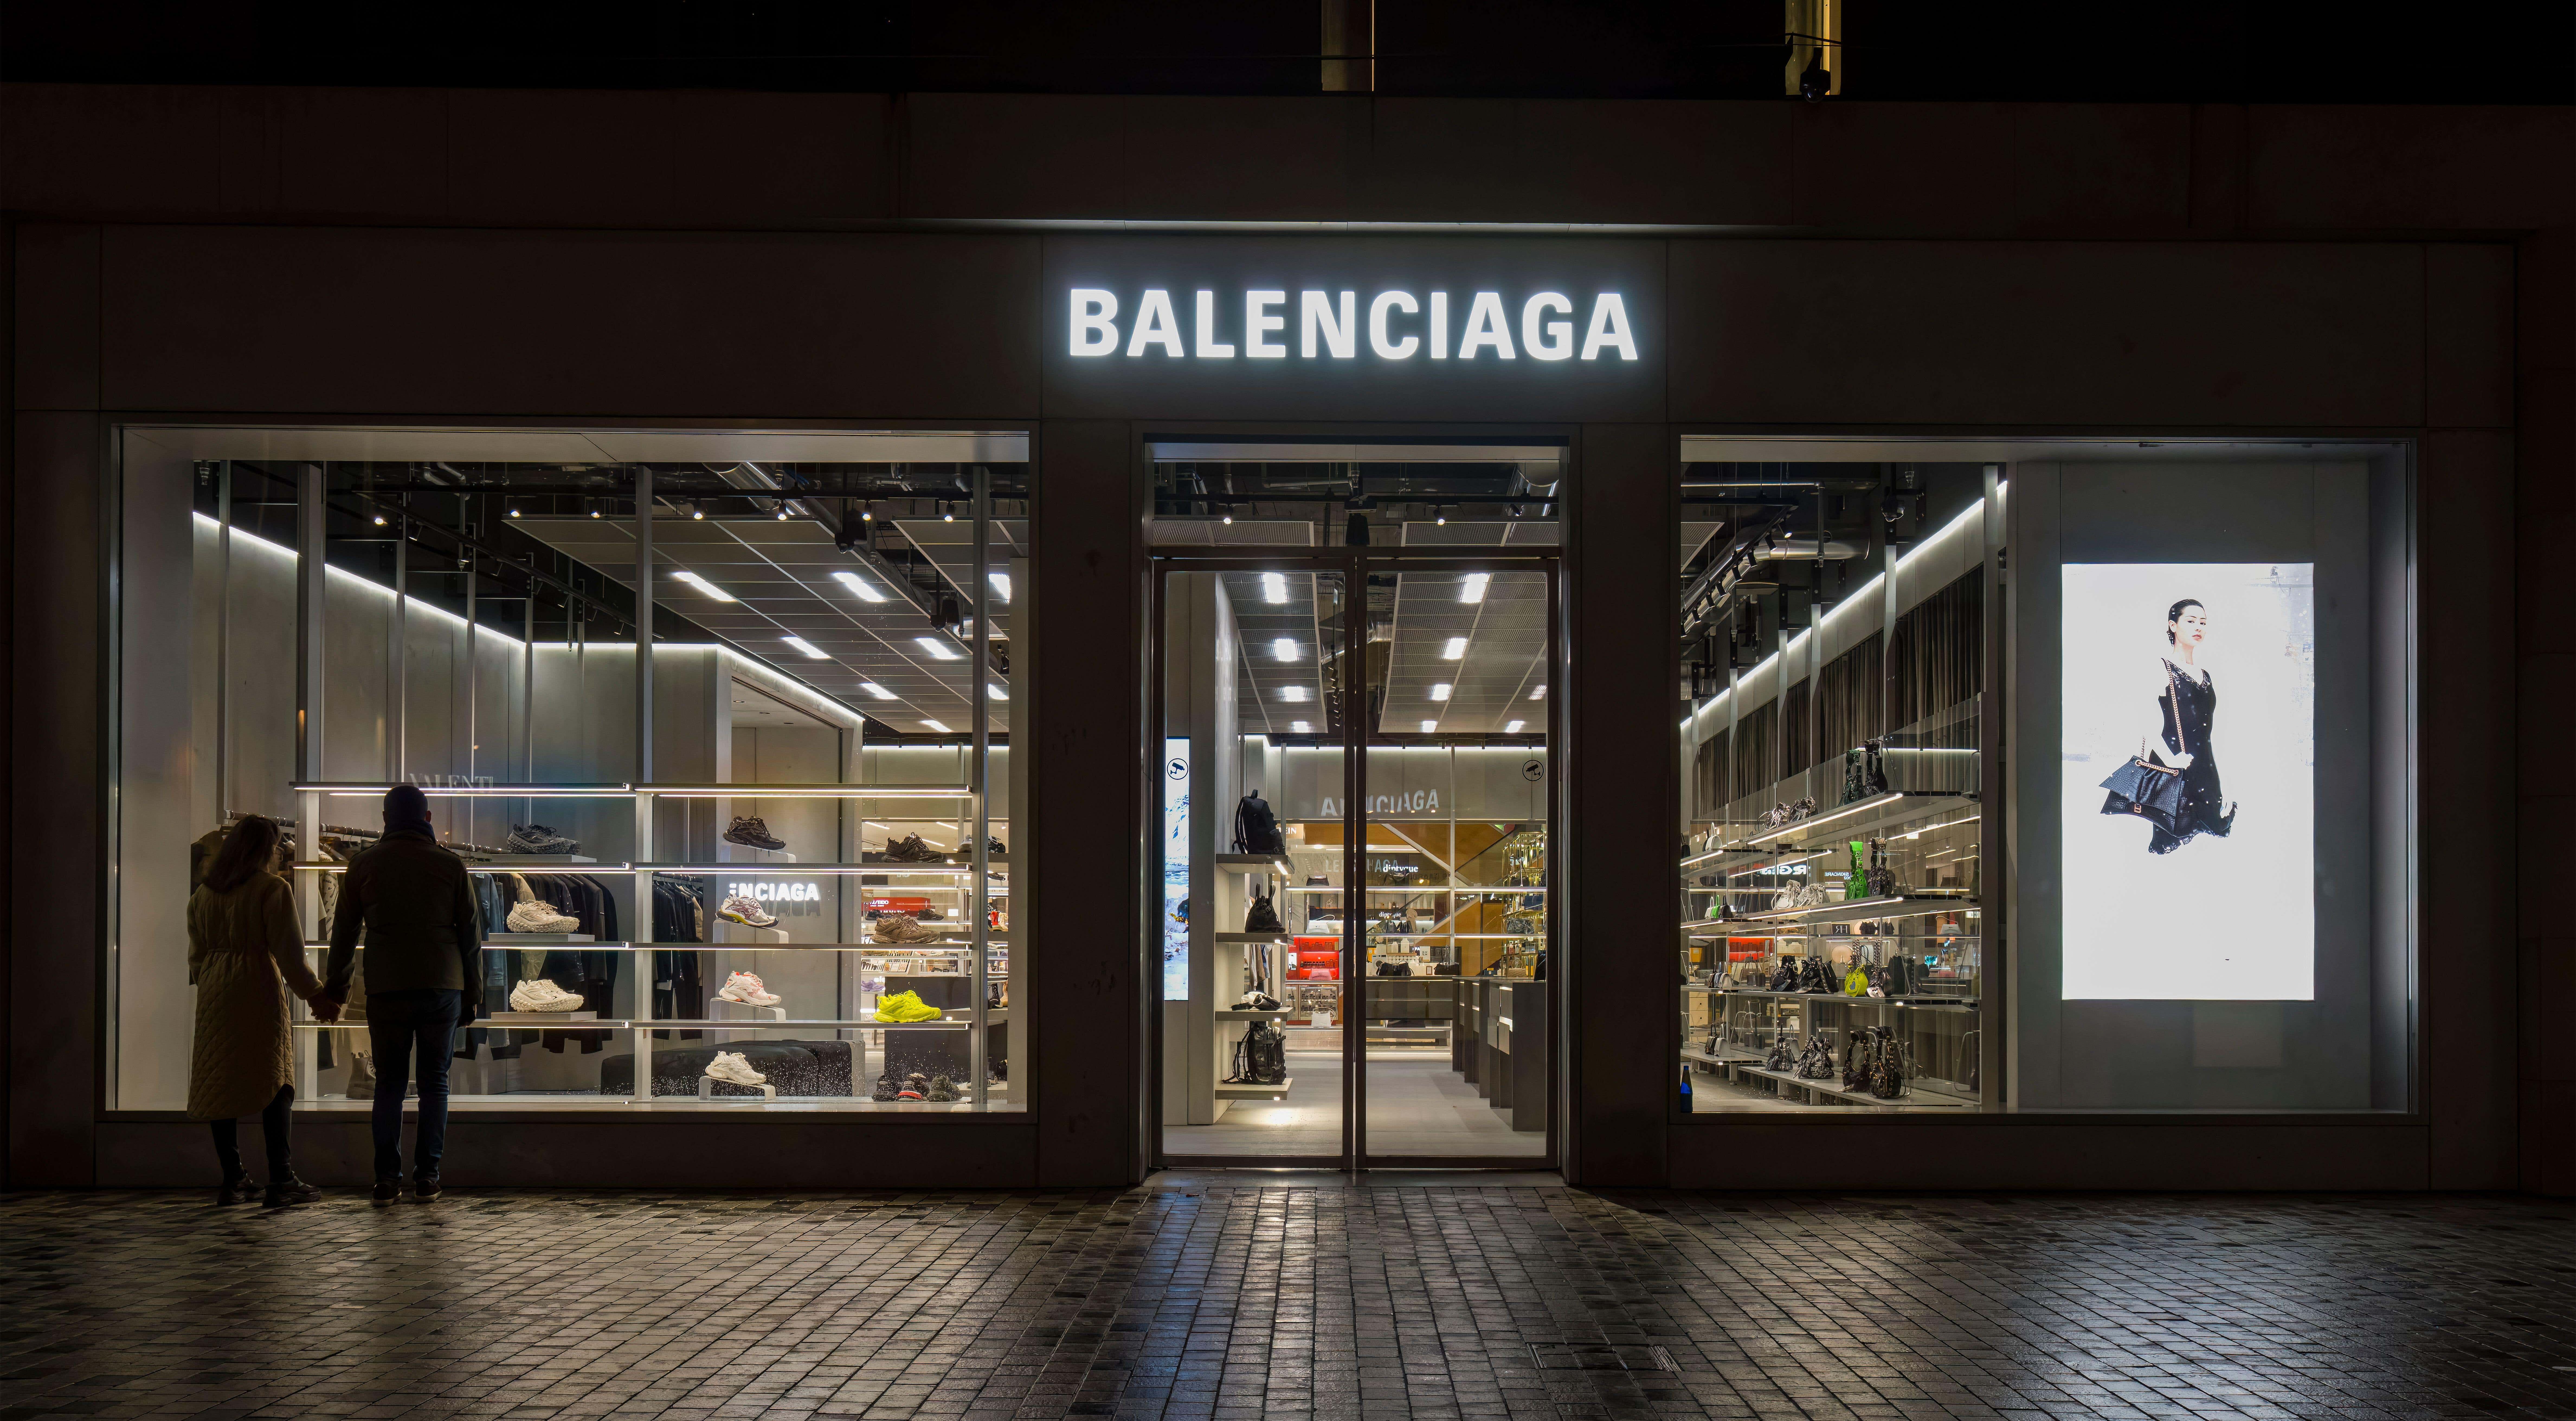 Balenciaga Receives Backlash Over Bondage Clothing Ads for Kids